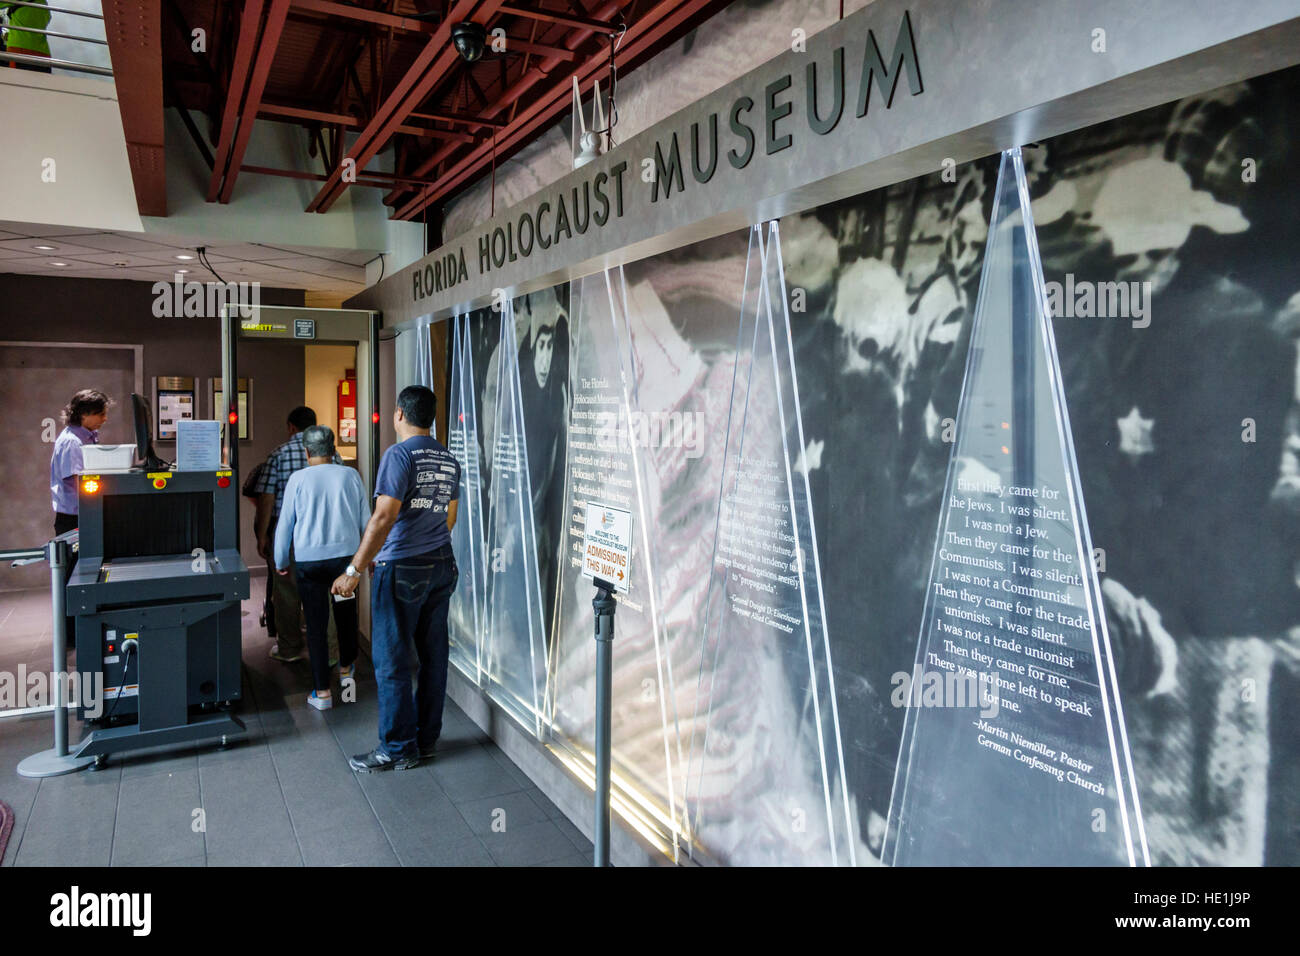 St. Saint Petersburg Florida, Florida Holocaust Museum, innen, Ausstellungsausstellung Sammlung Sicherheit, Metalldetektor, FL161129097 Stockfoto